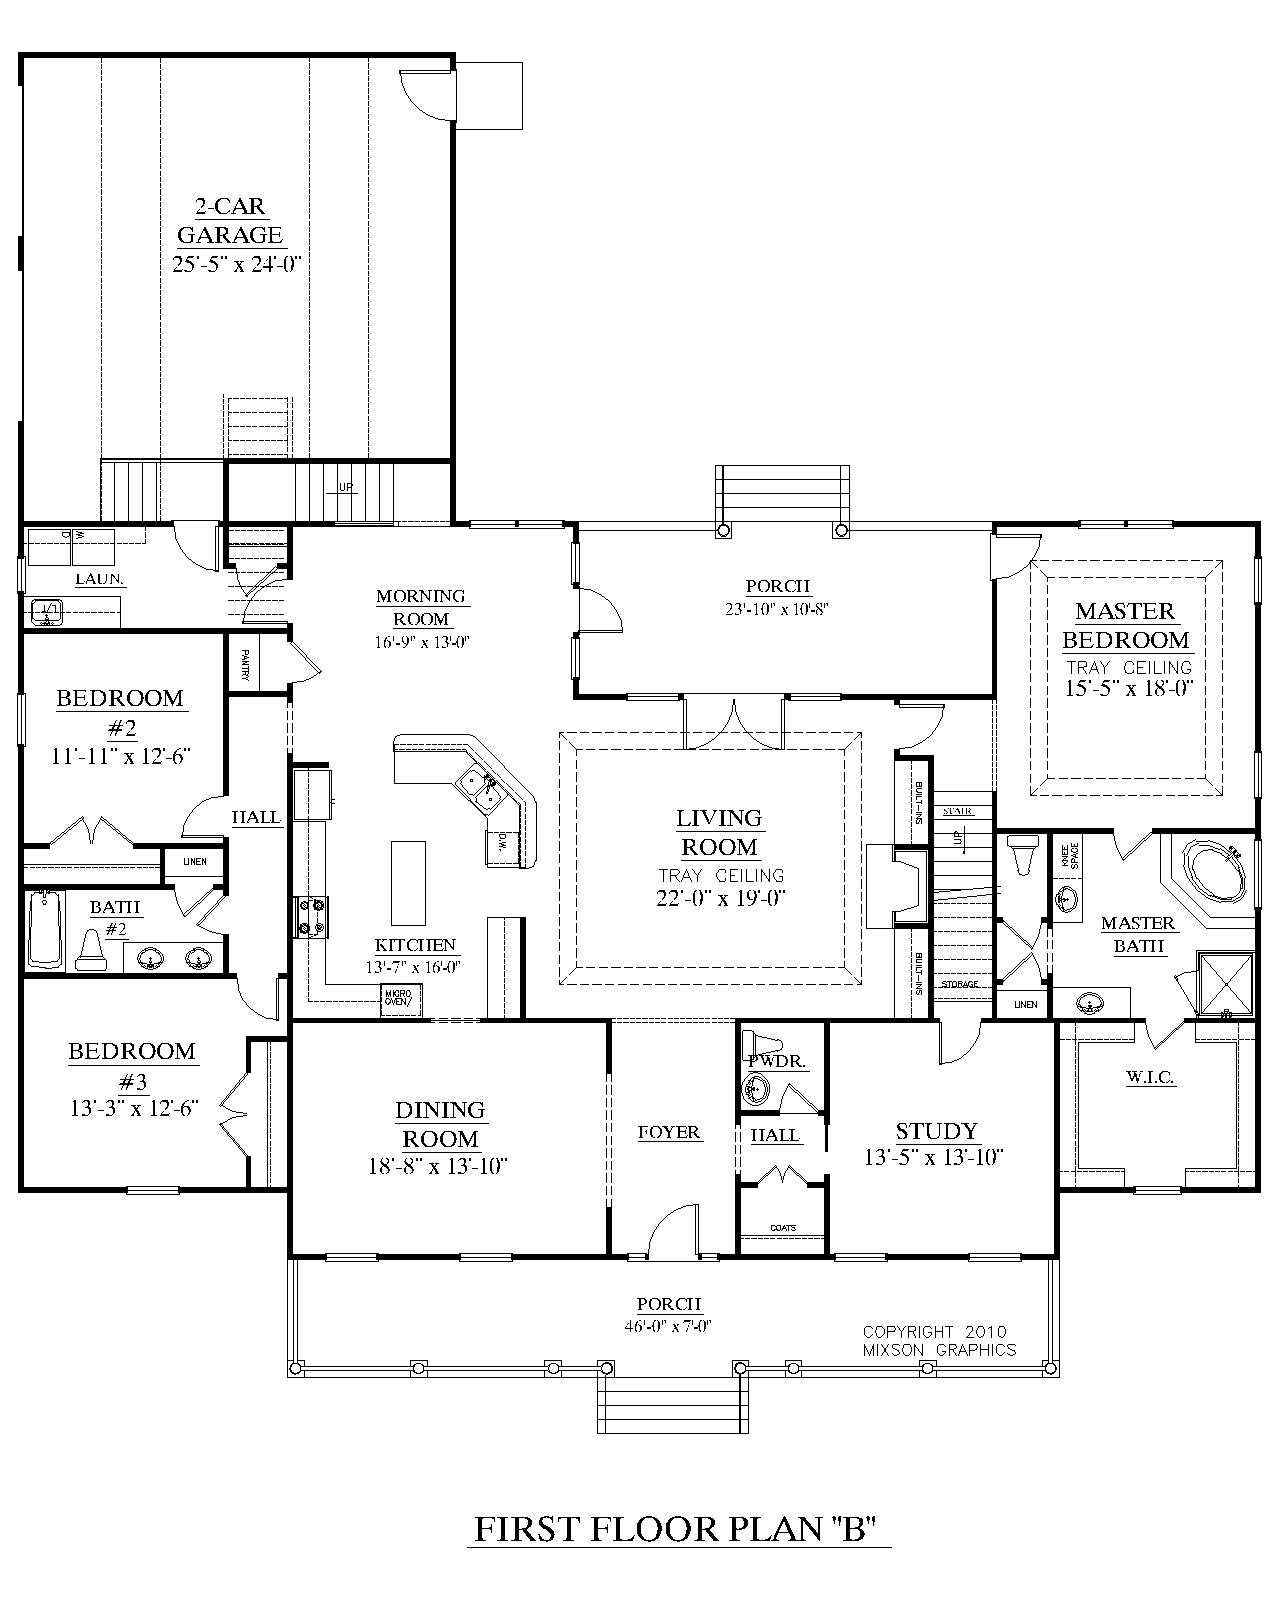 House Plan 2890-B first floor